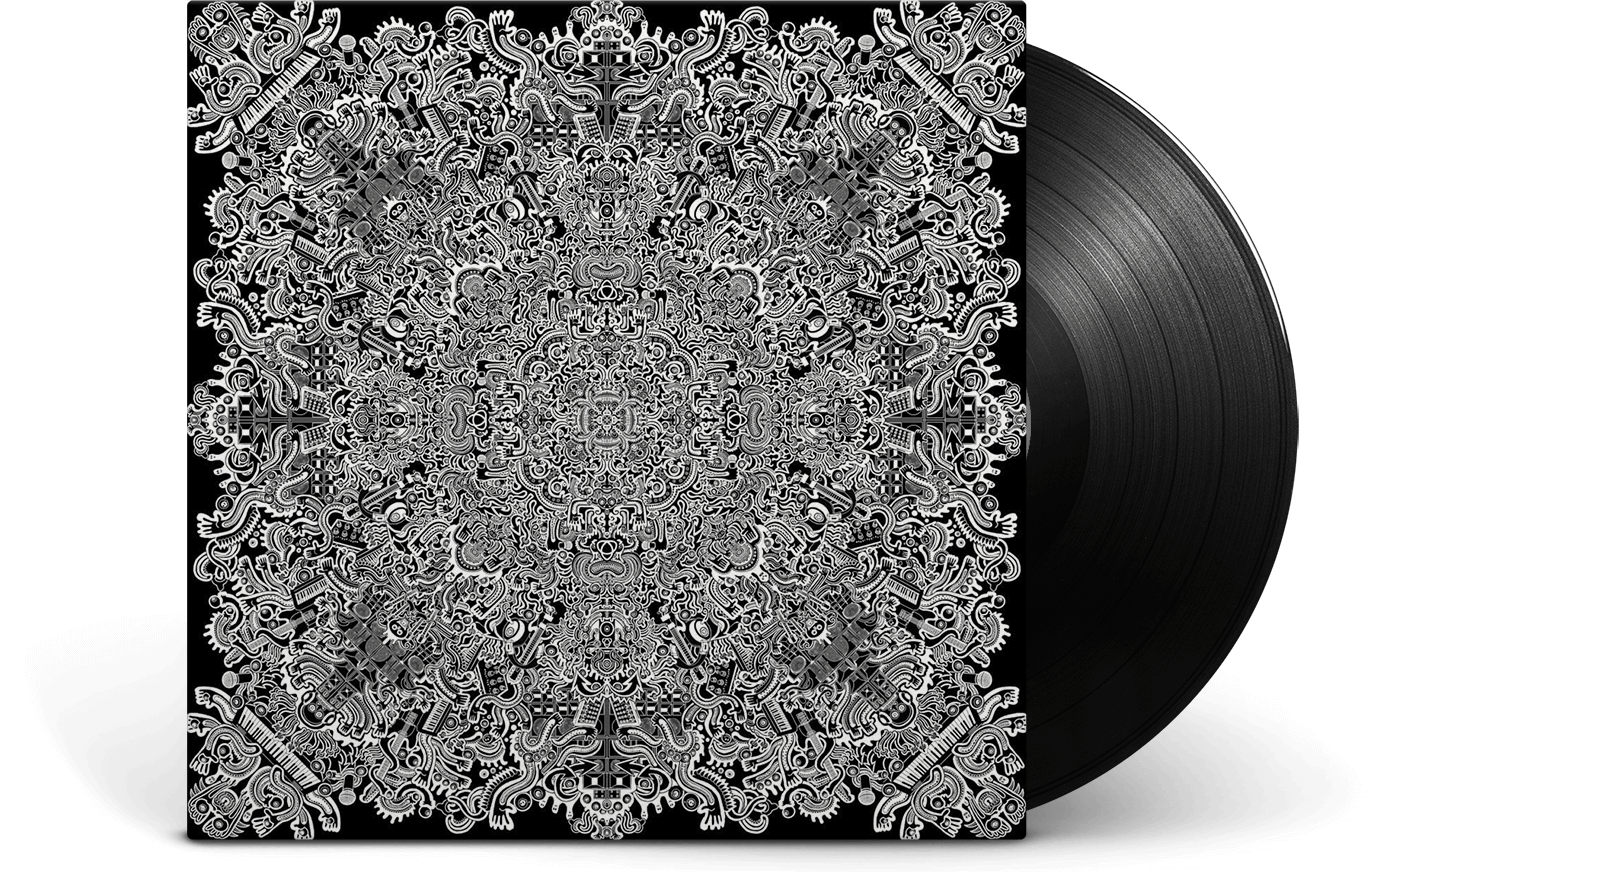 Louis Tomlinson - Faith in the Future 2LP LTD Deluxe Black & White Galaxy  Vinyl